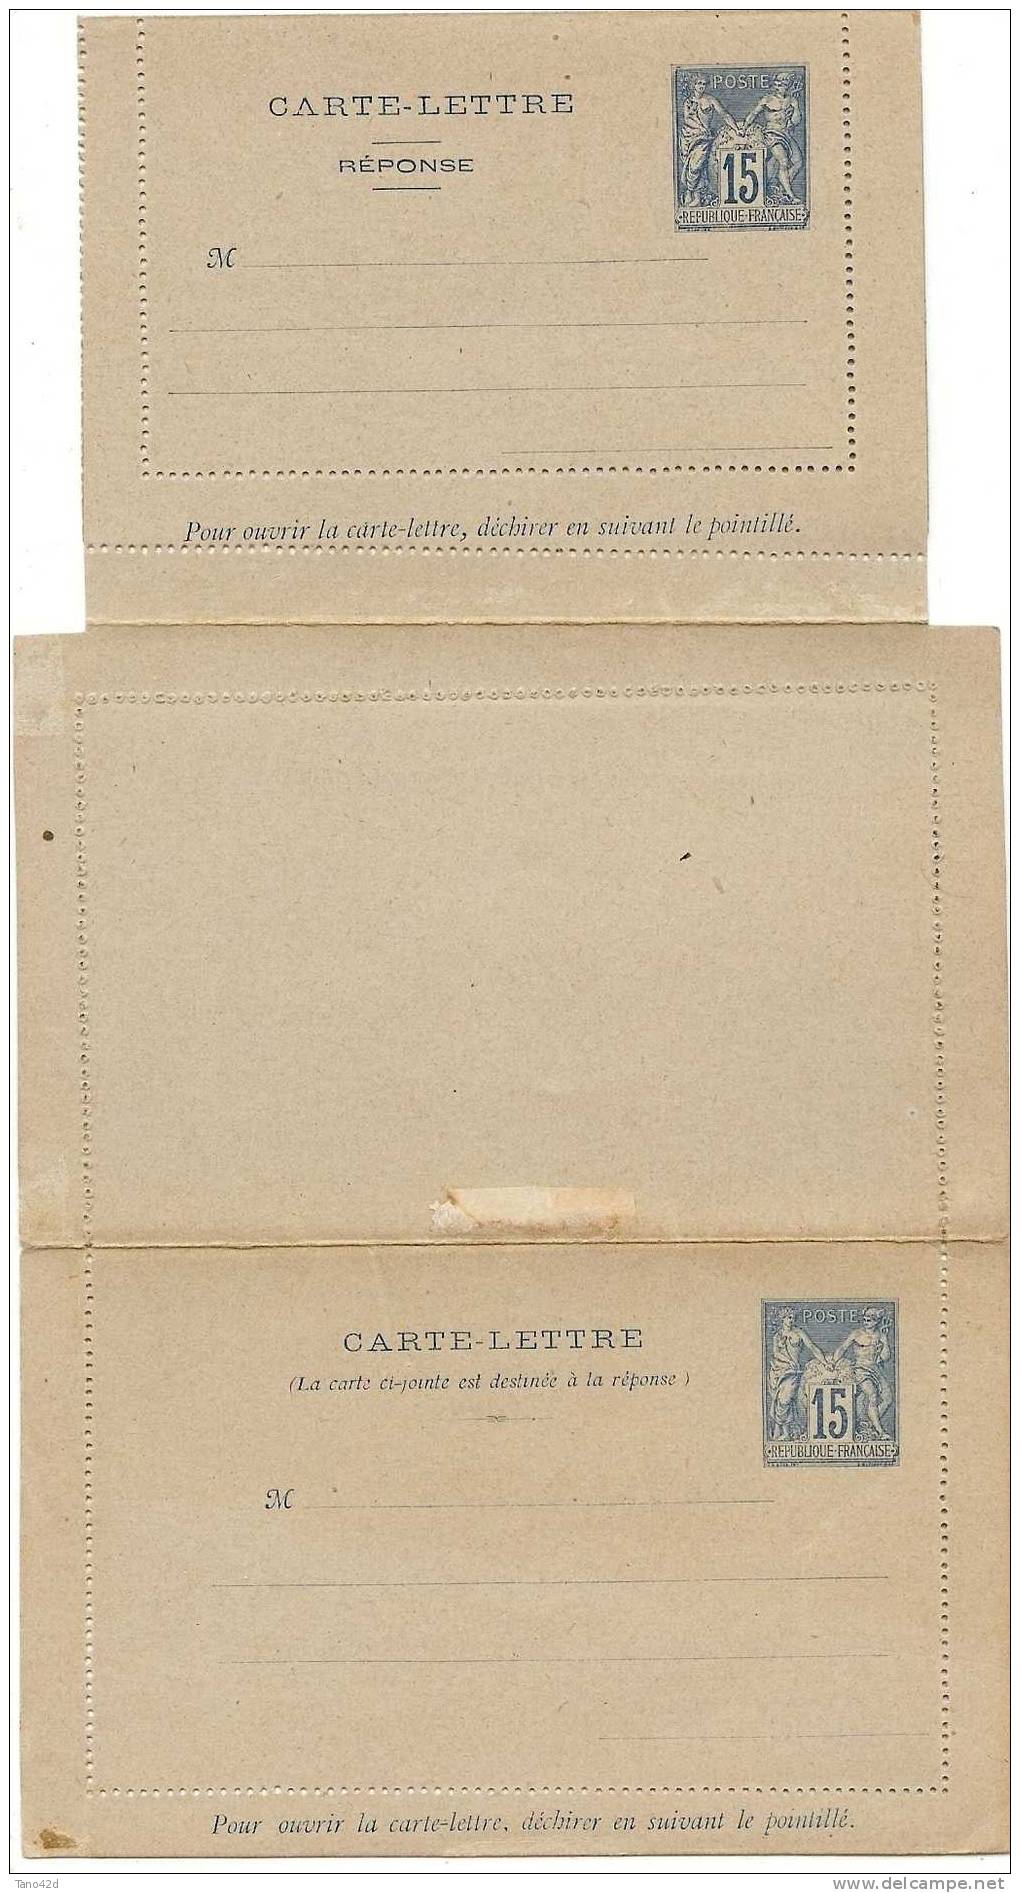 REF LGM - FRANCE CARTE LETTRE AVEC REPONSE PAYEE TYPE SAGE 15c - Letter Cards